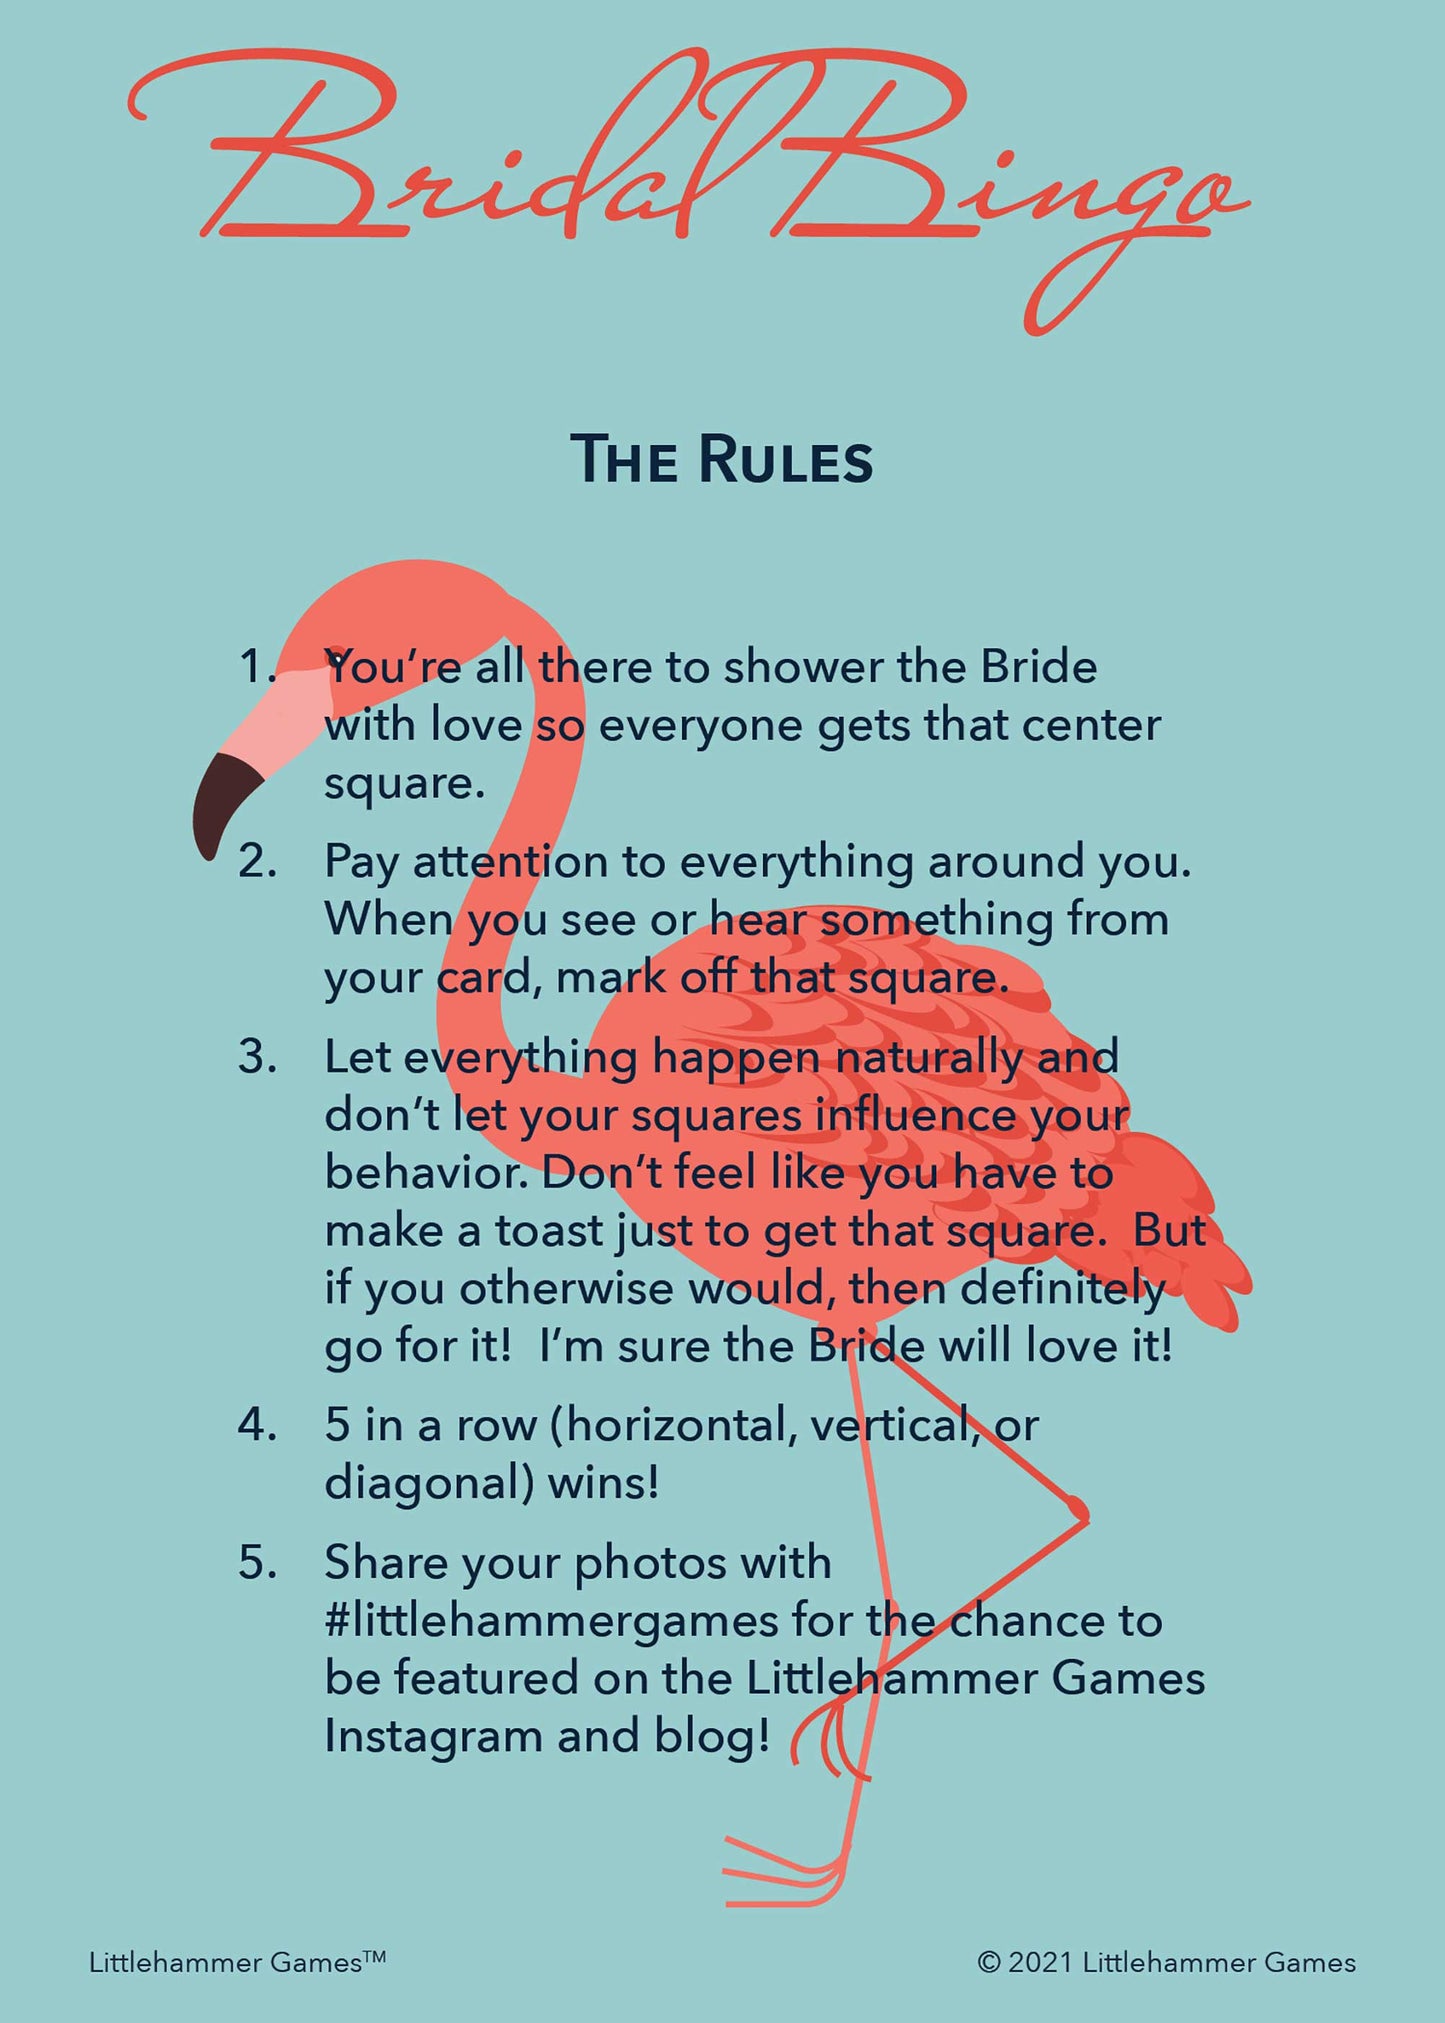 Bridal Bingo rules card on a flamingo background